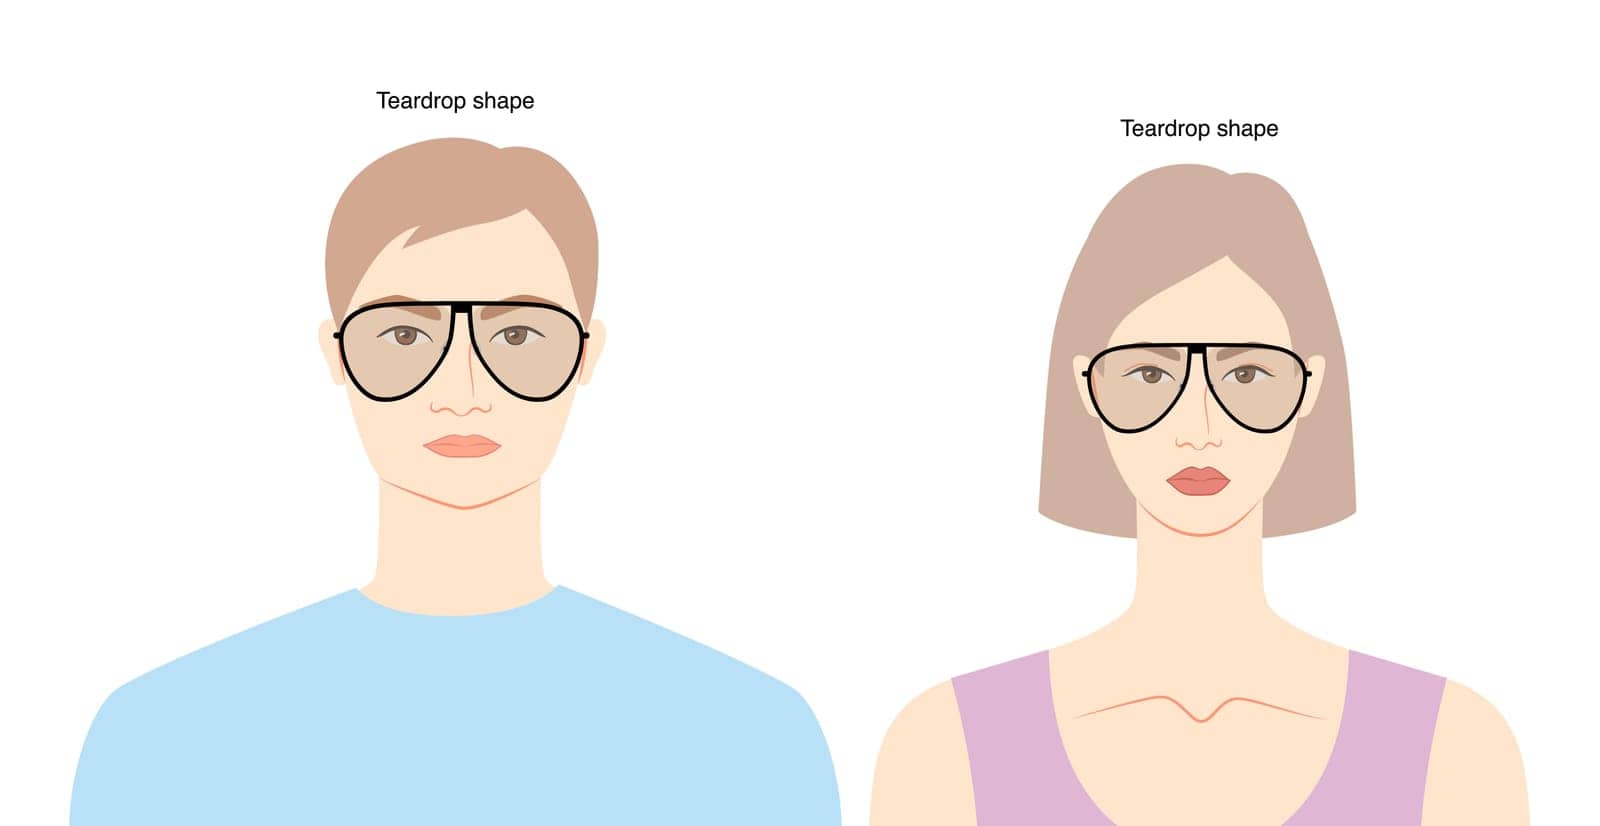 Teardrop Shape Aviator frame glasses on women and men flat character fashion accessory illustration. Sunglass by Vectoressa